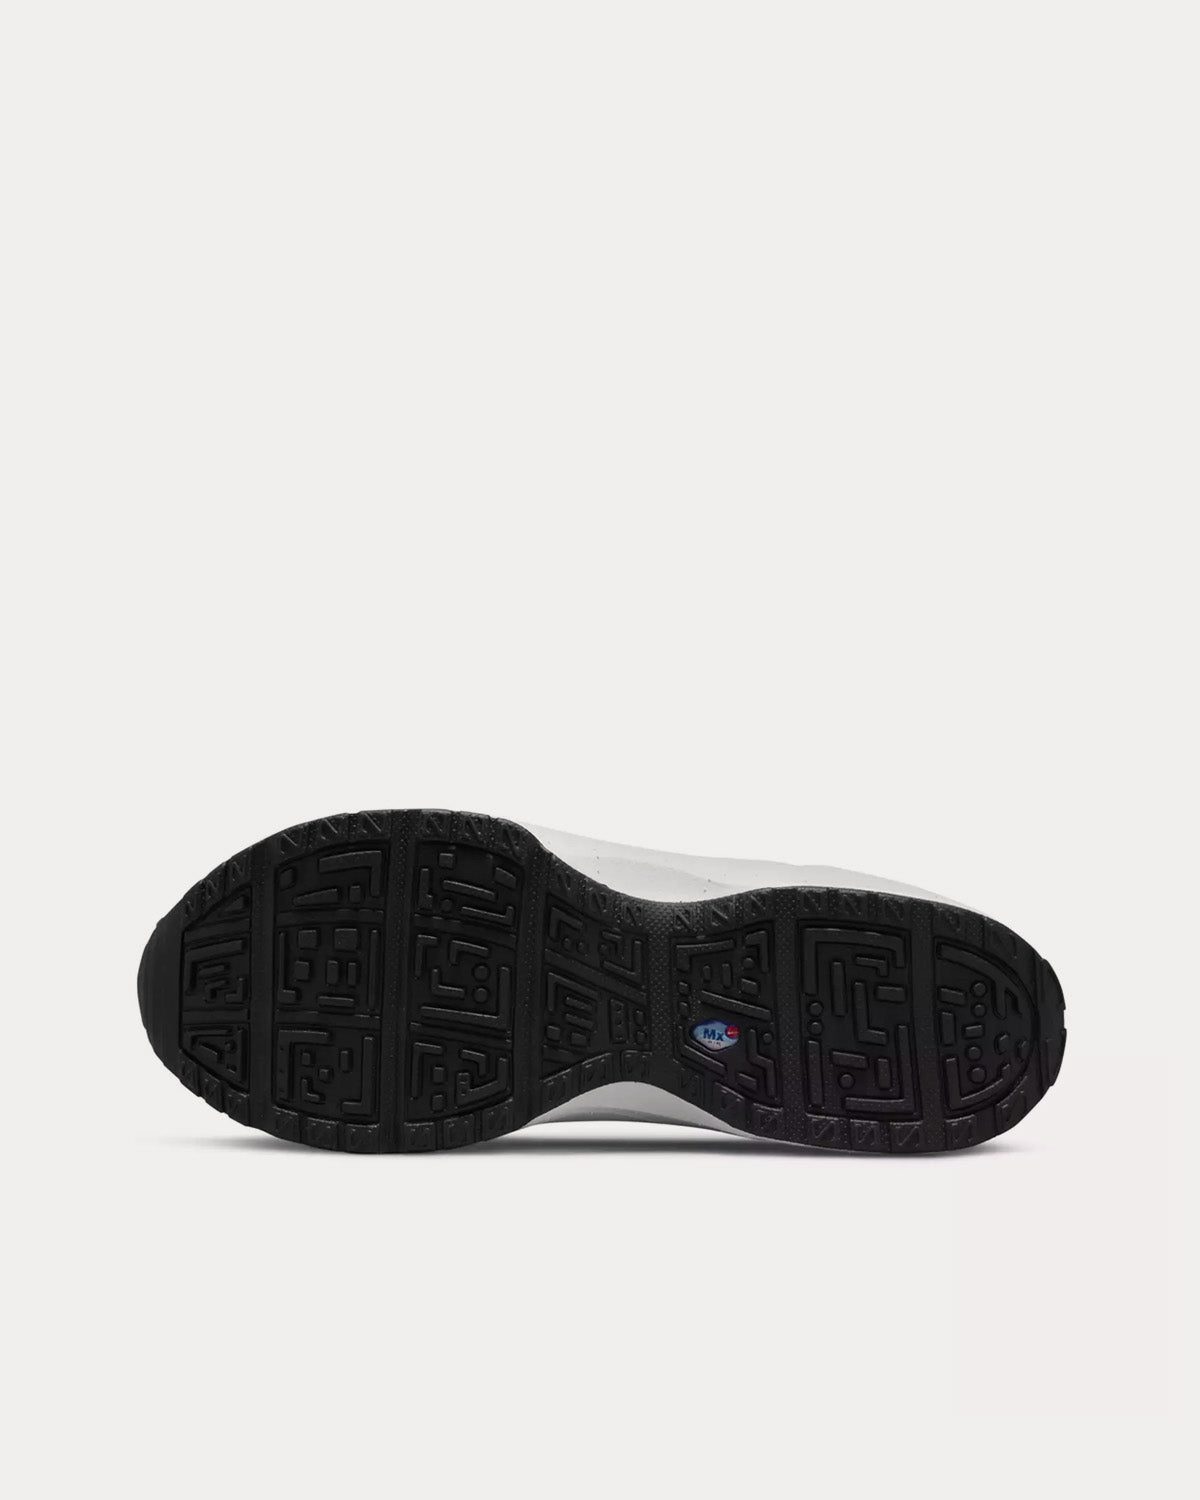 Nike x Comme des Garçons - Air Max Sunder Black / White Low Top Sneakers